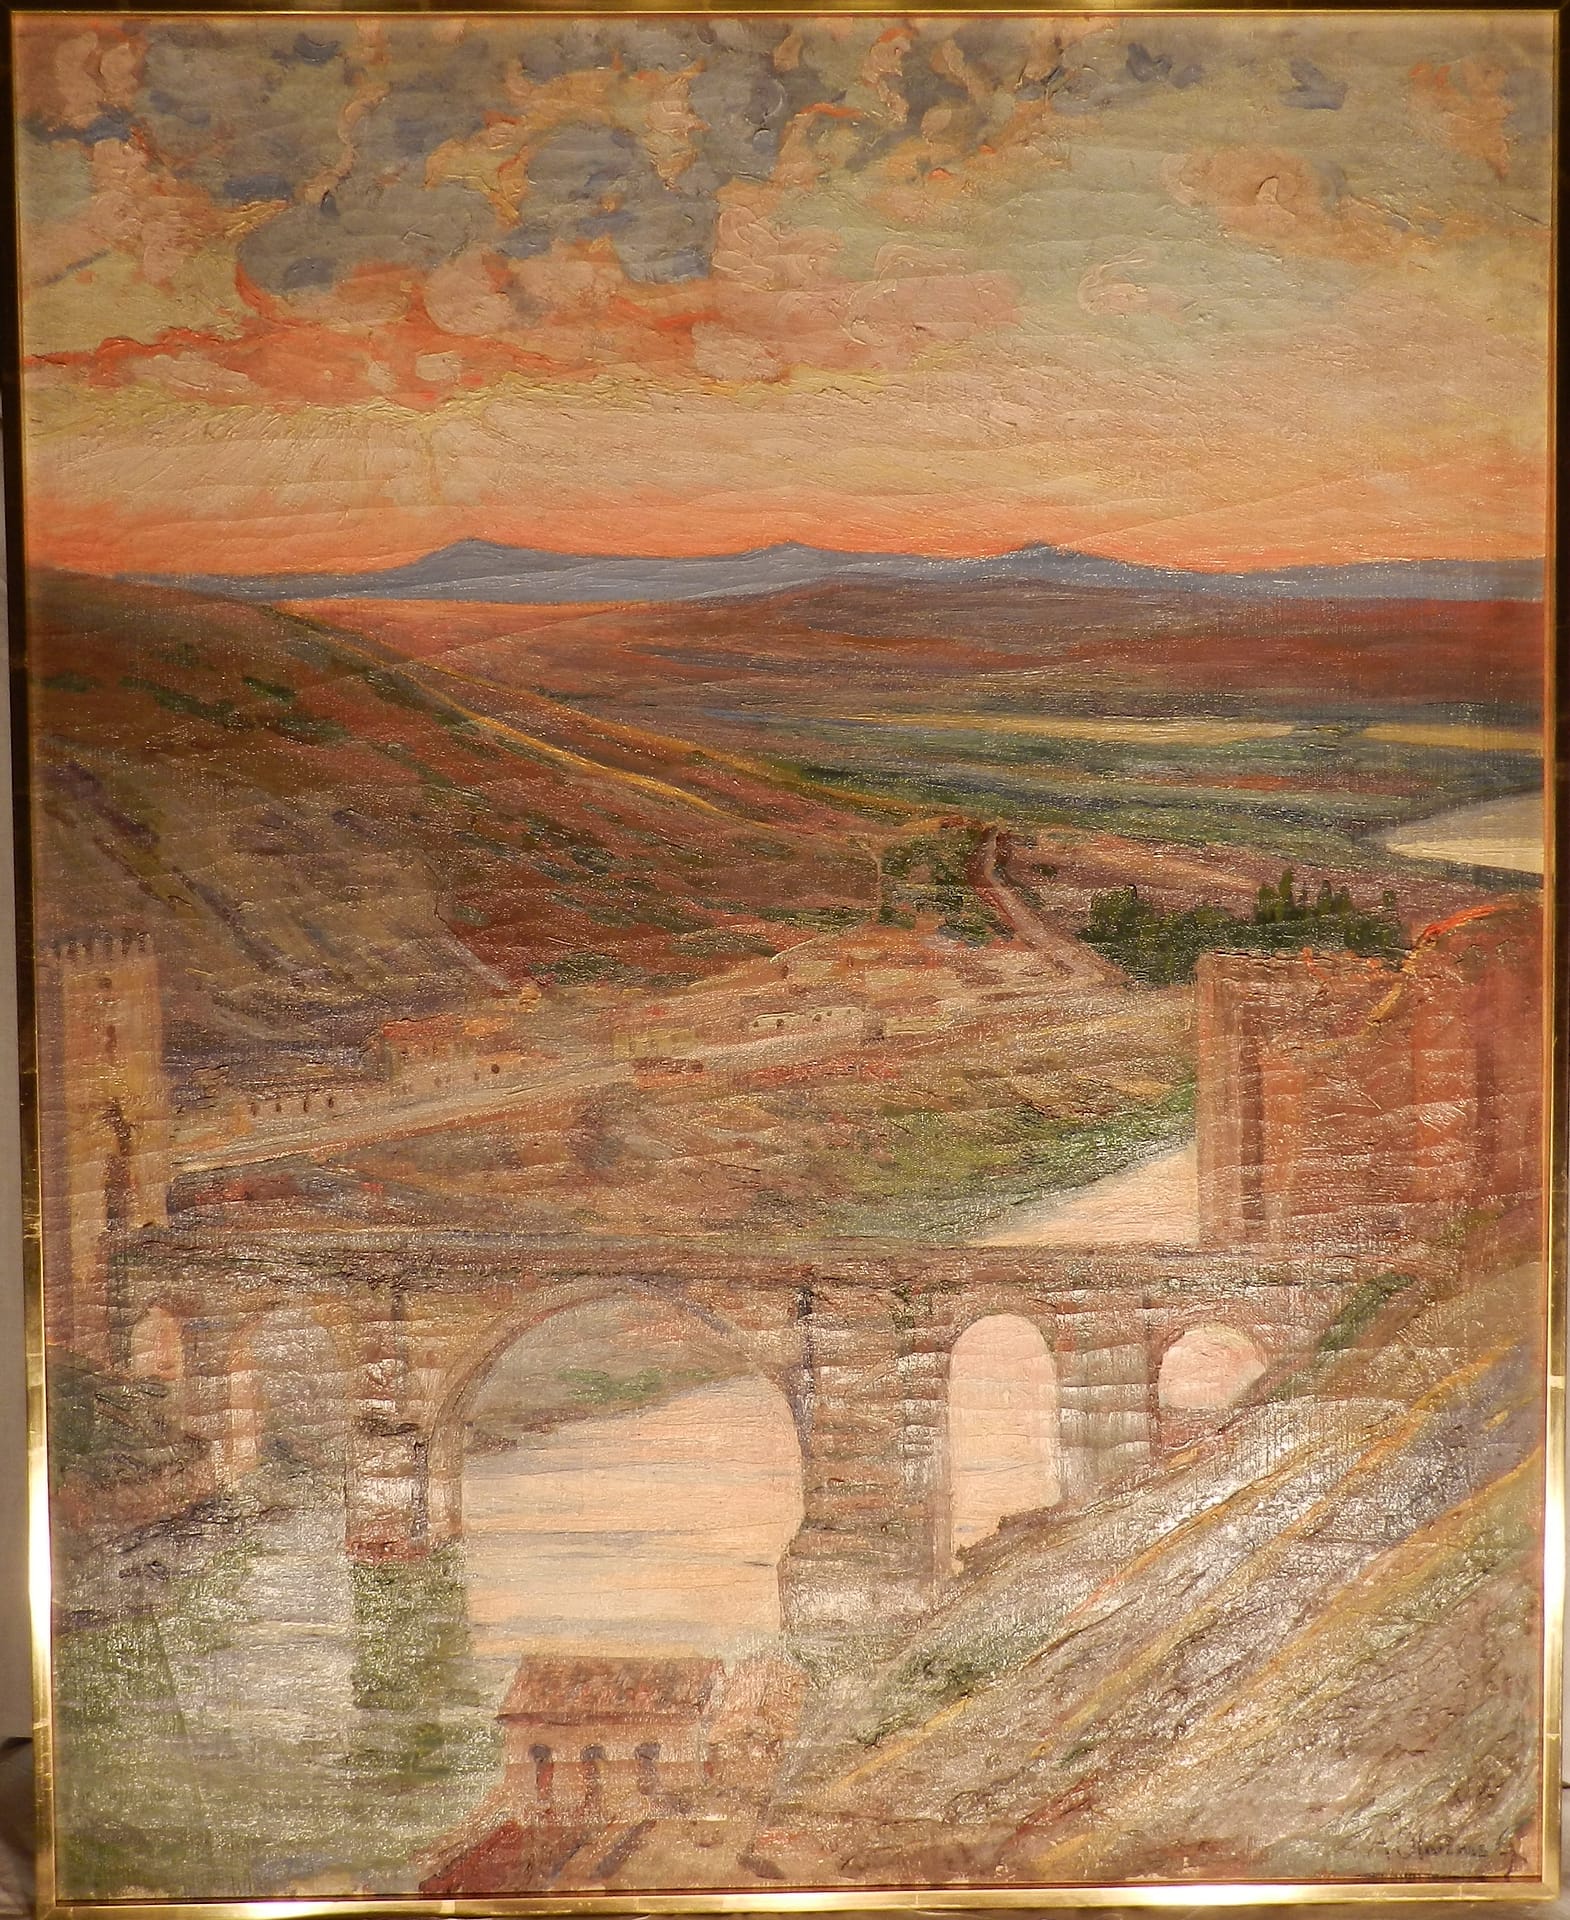 Puente San Martin desde Roca Tarpeya by Angel Oliveras Guart via Wiki Commons